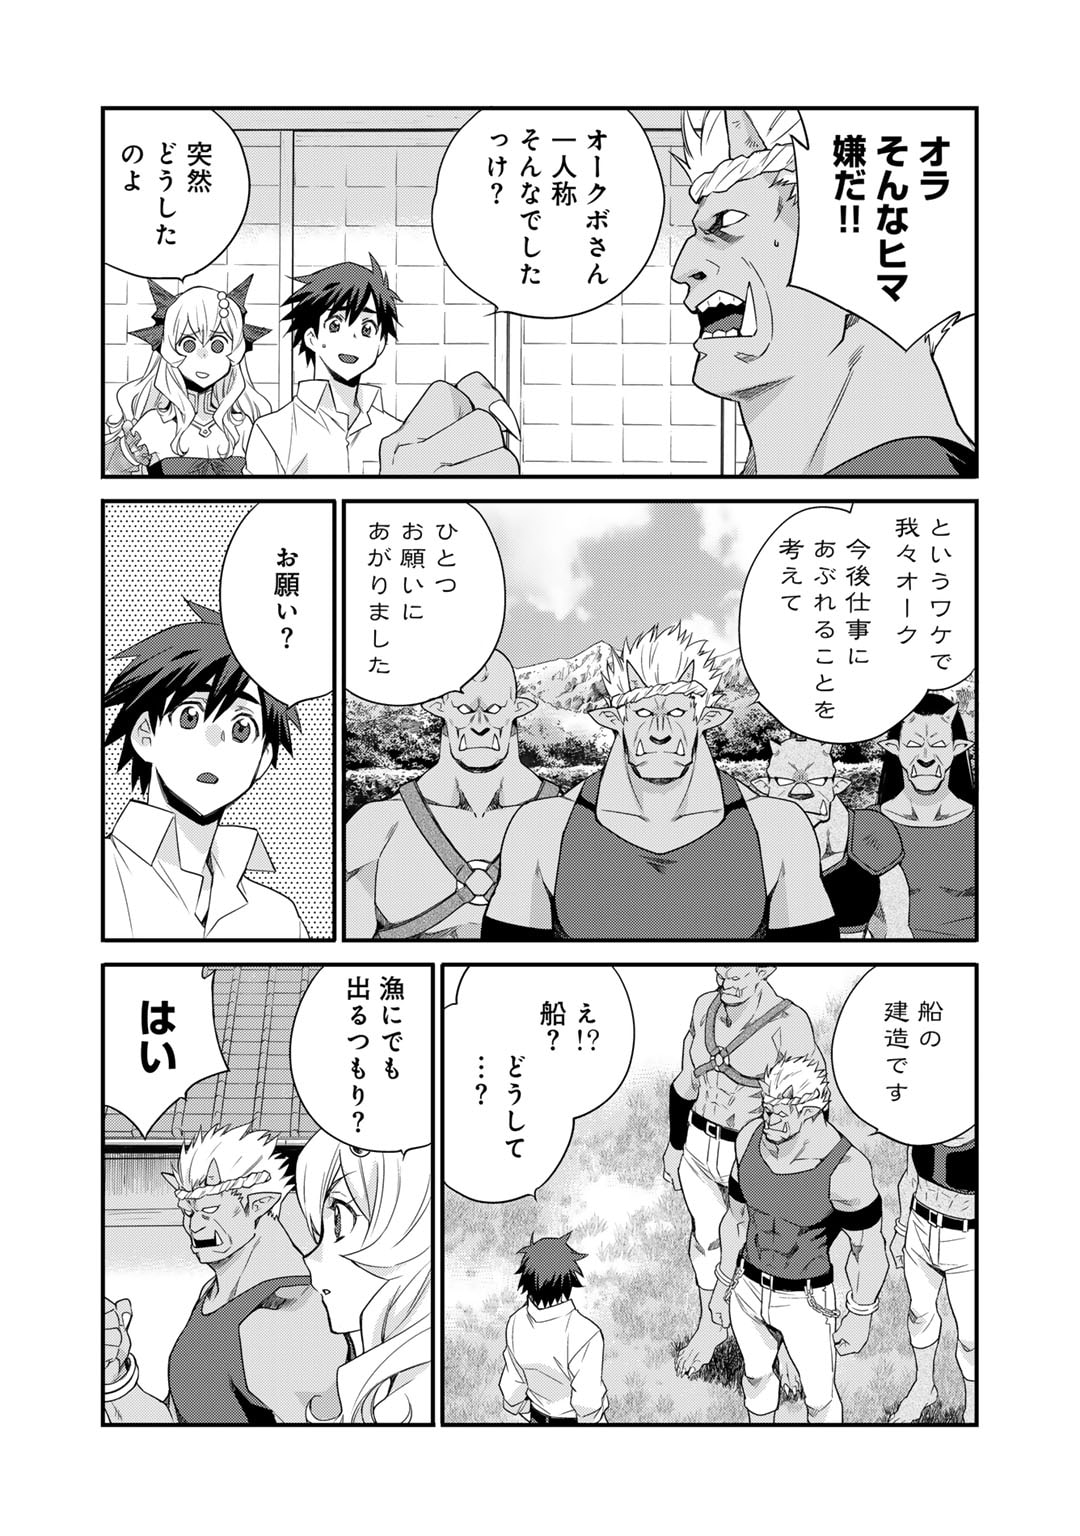 Isekai de Tochi wo Katte Noujou wo Tsukurou - Chapter 49 - Page 3